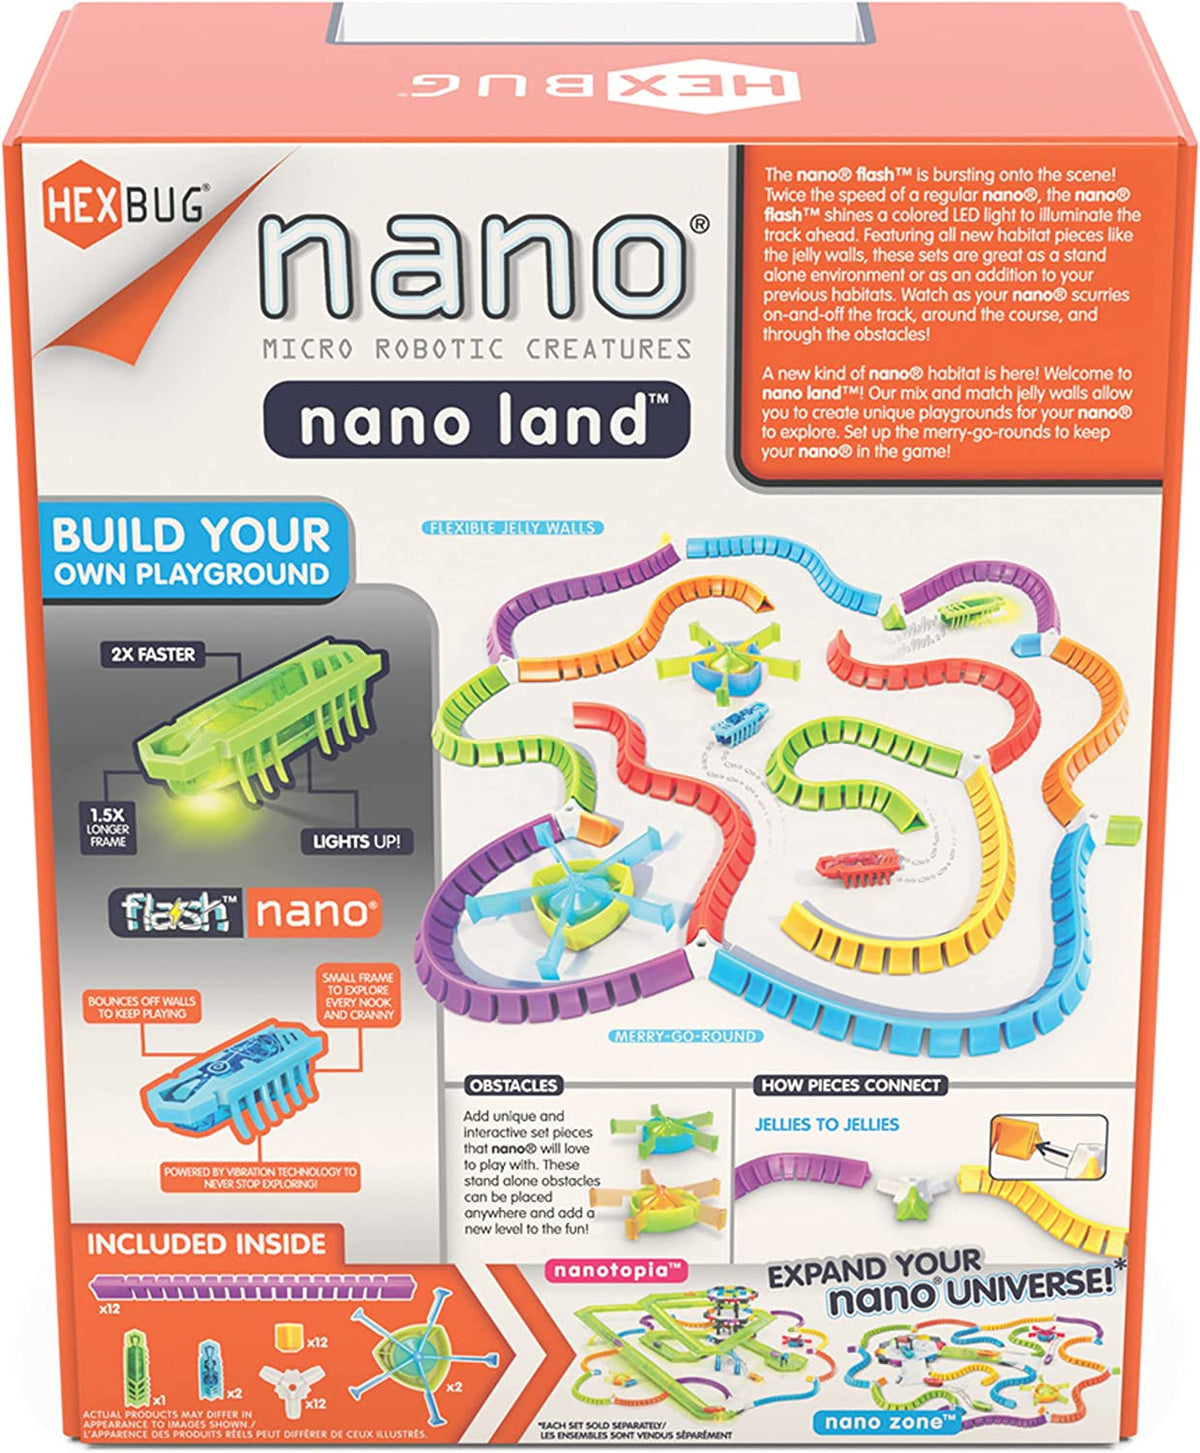 Nano Land Construction Set